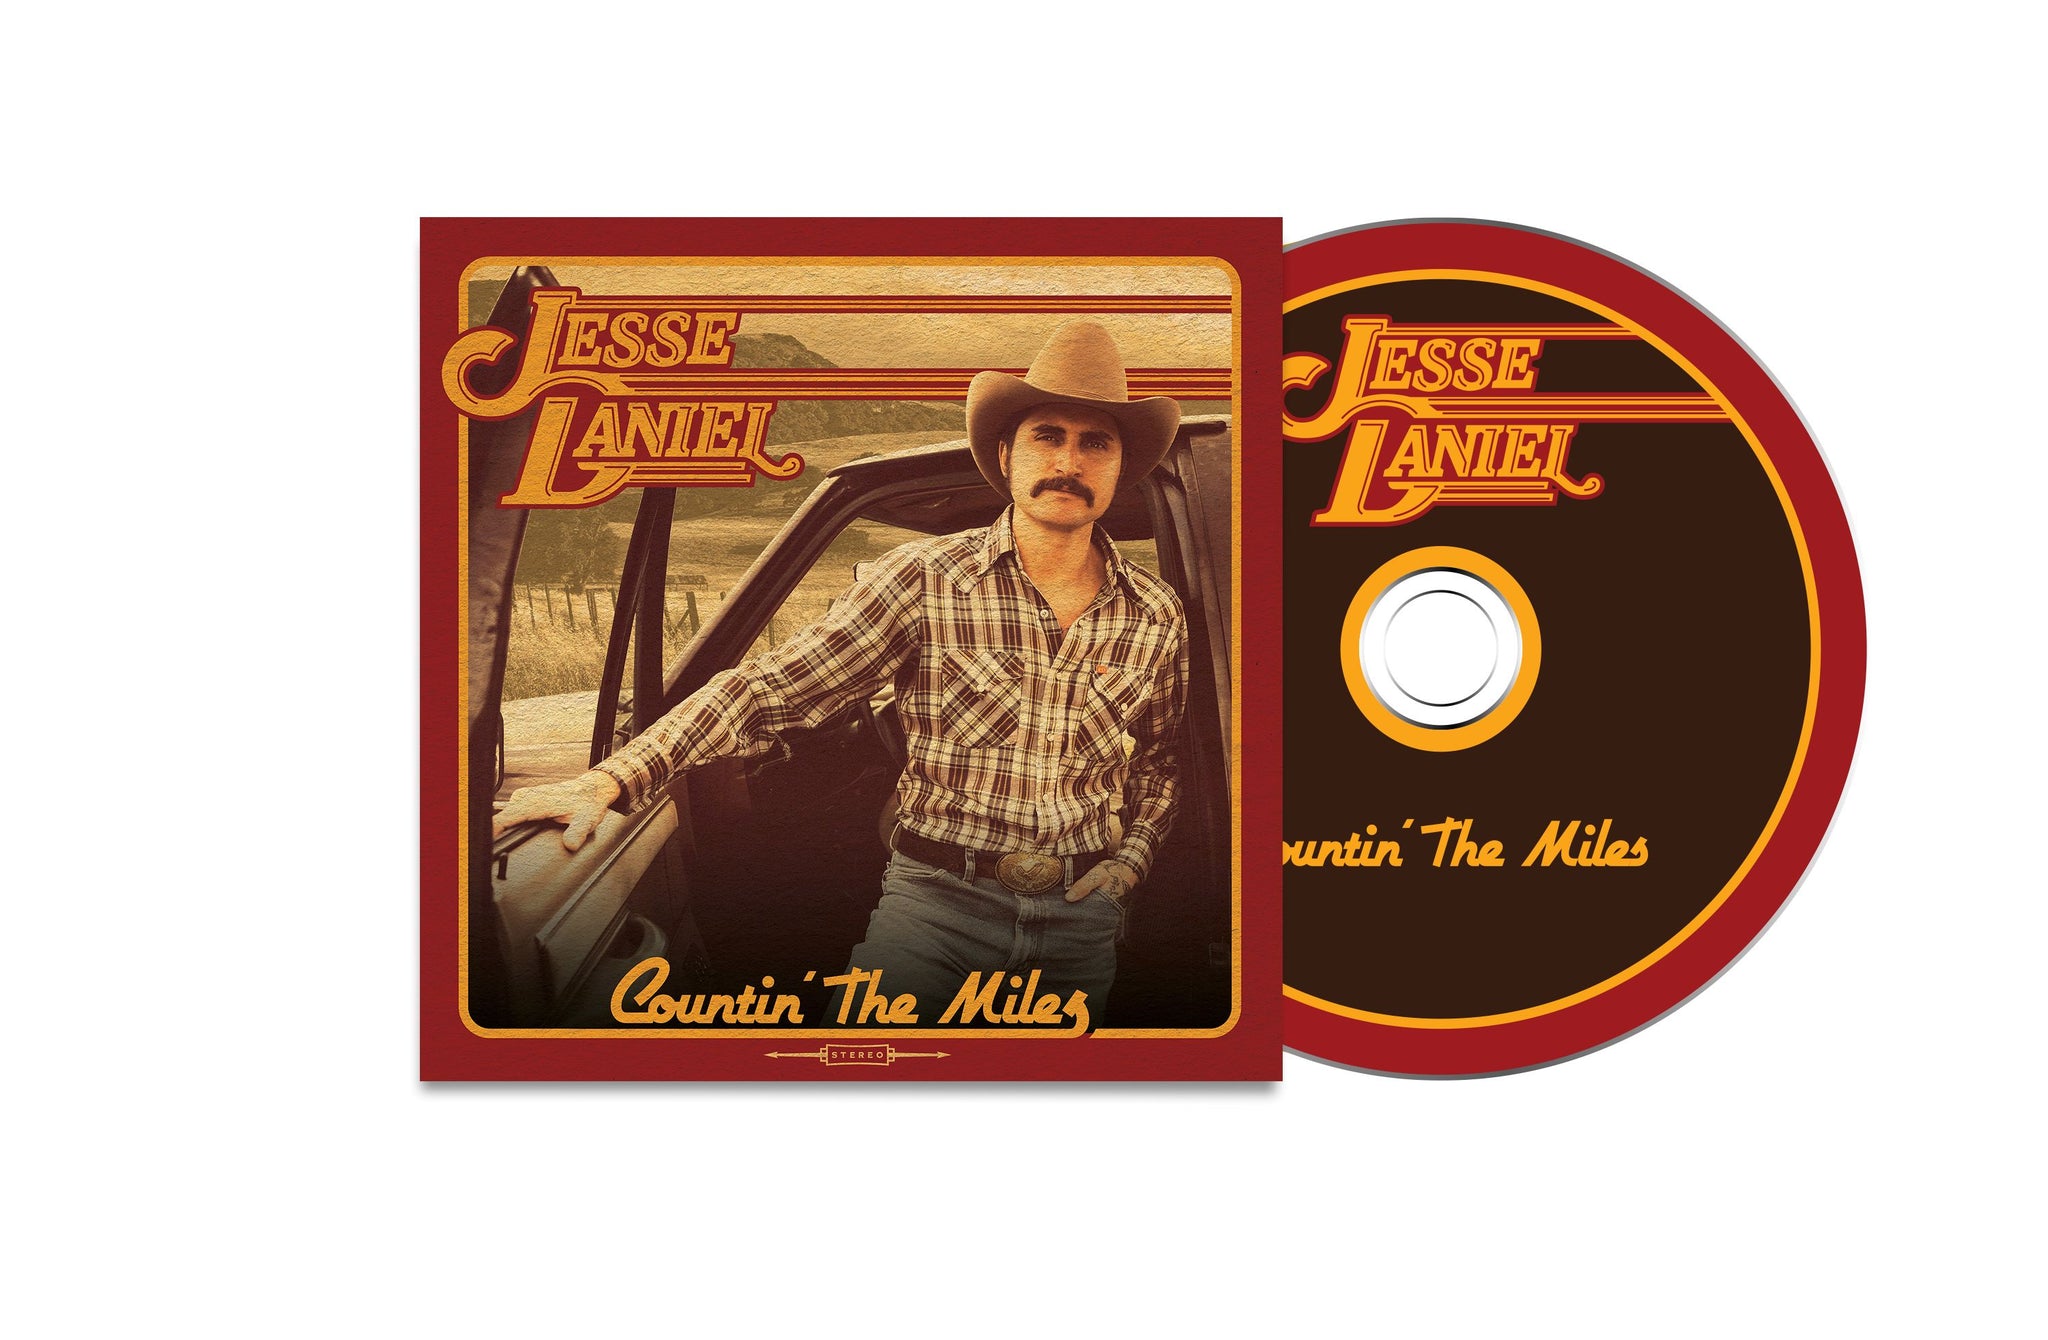 Jesse Daniel - Countin' The Miles [CD]